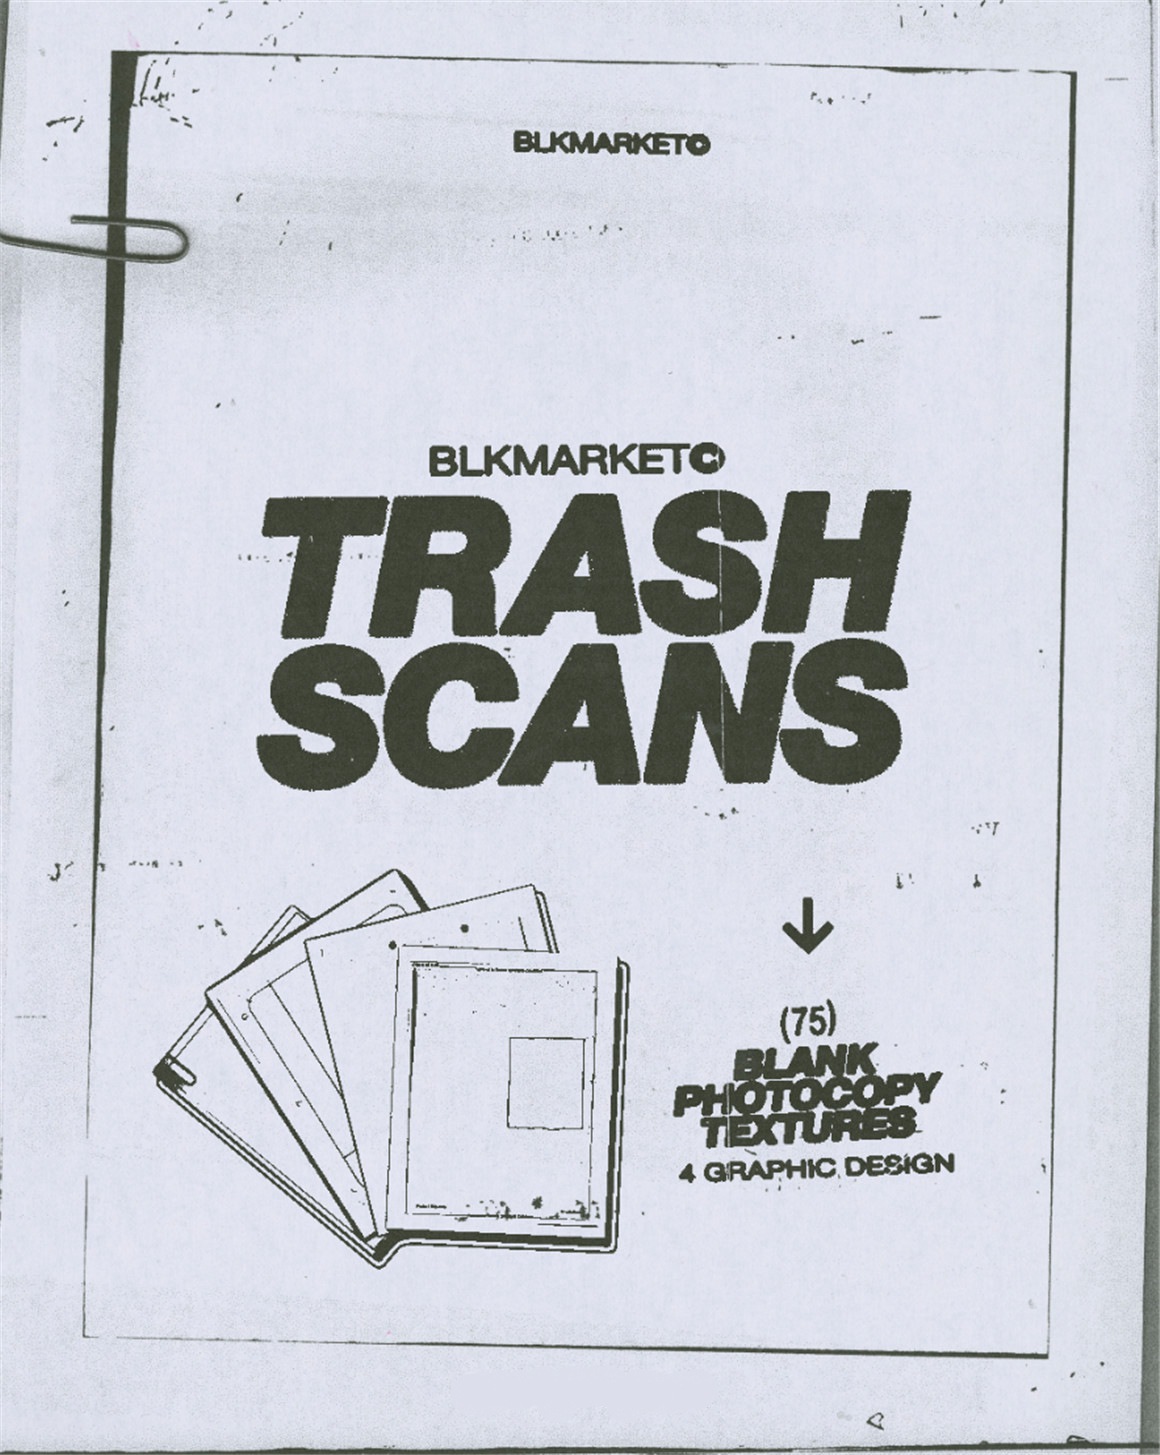 BLKMARKET 75个高分辨率黑白文件影印纸张标签背景设计纹理 TRASH SCANS 图片素材 第2张